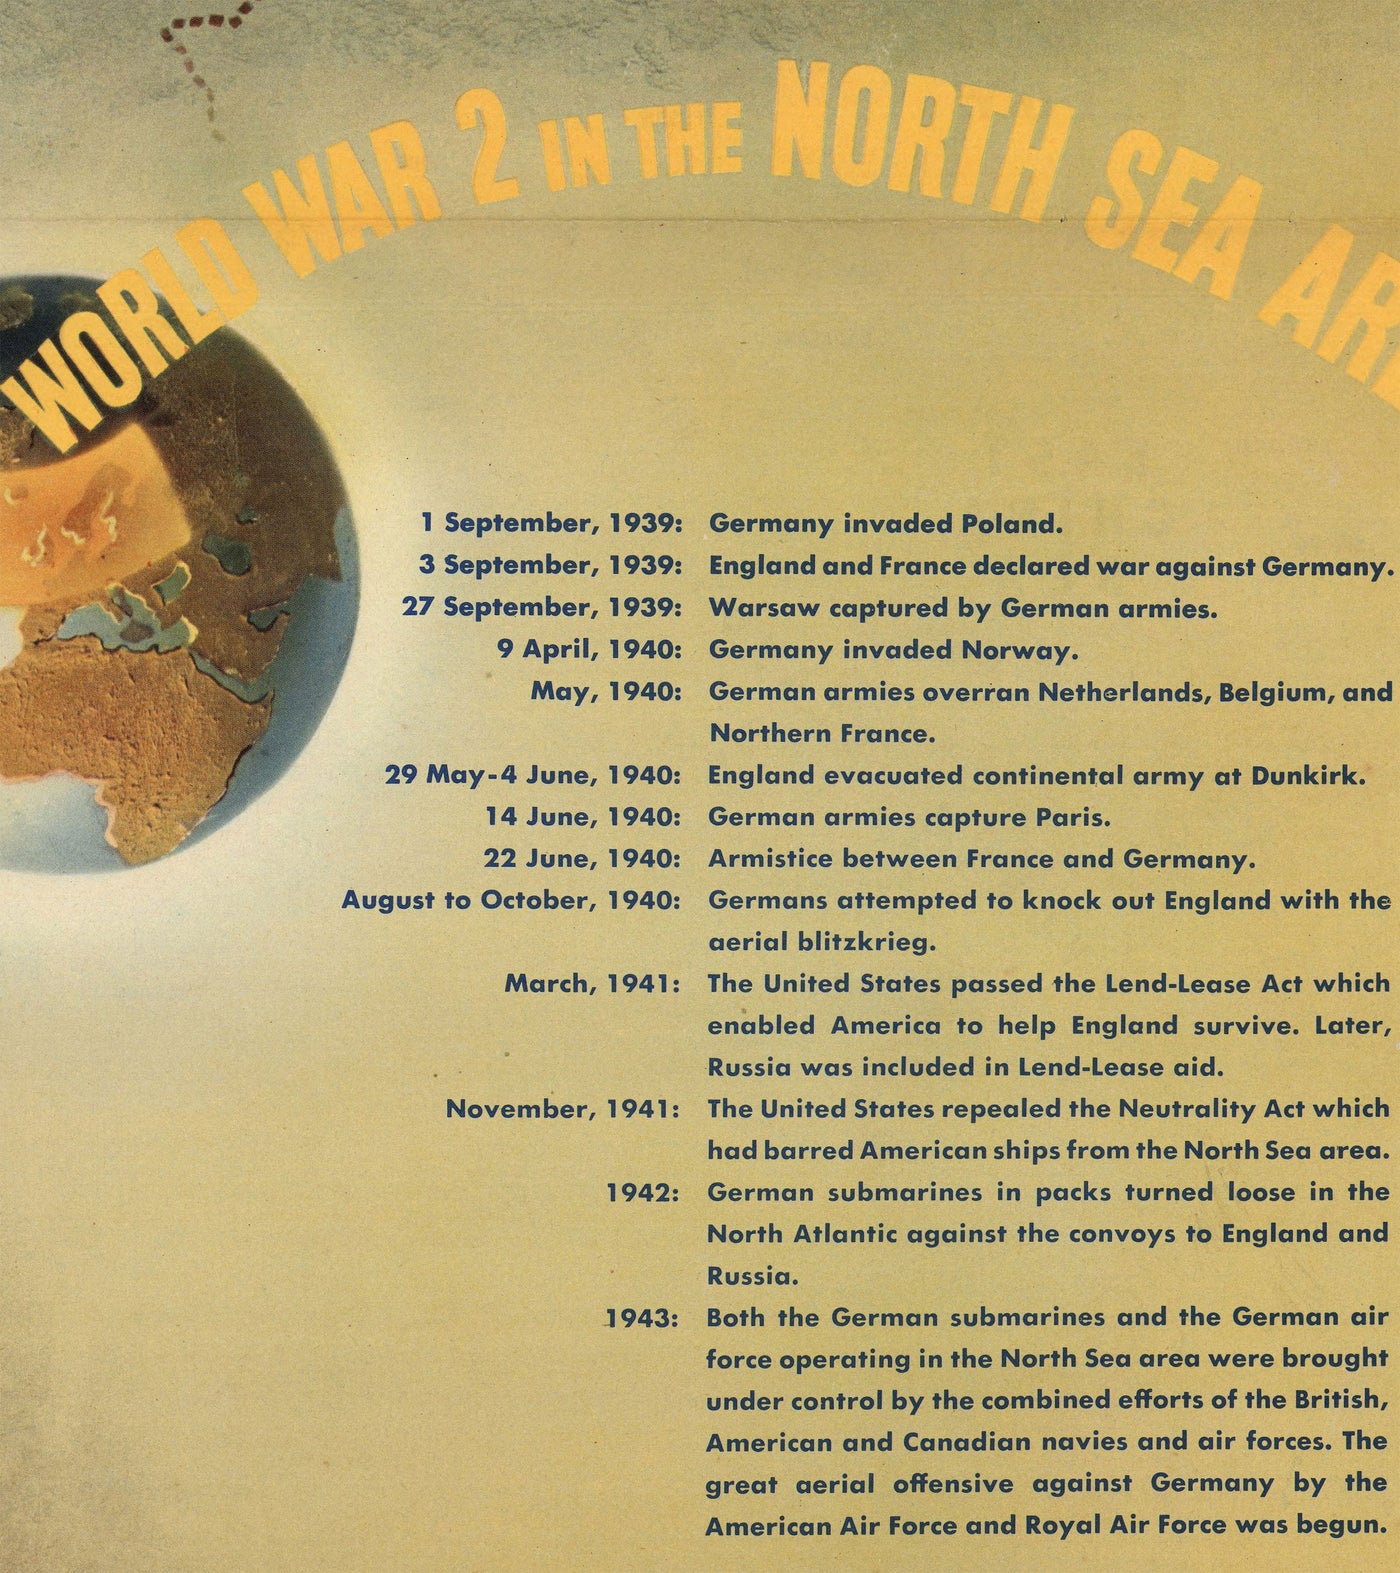 NAVWARMAP No. 3 - Old World War 2 Mapa, 1944 - Frente Occidental, Allies vs. Nazi - EE. UU. Marina Educativa y Propaganda Mapa